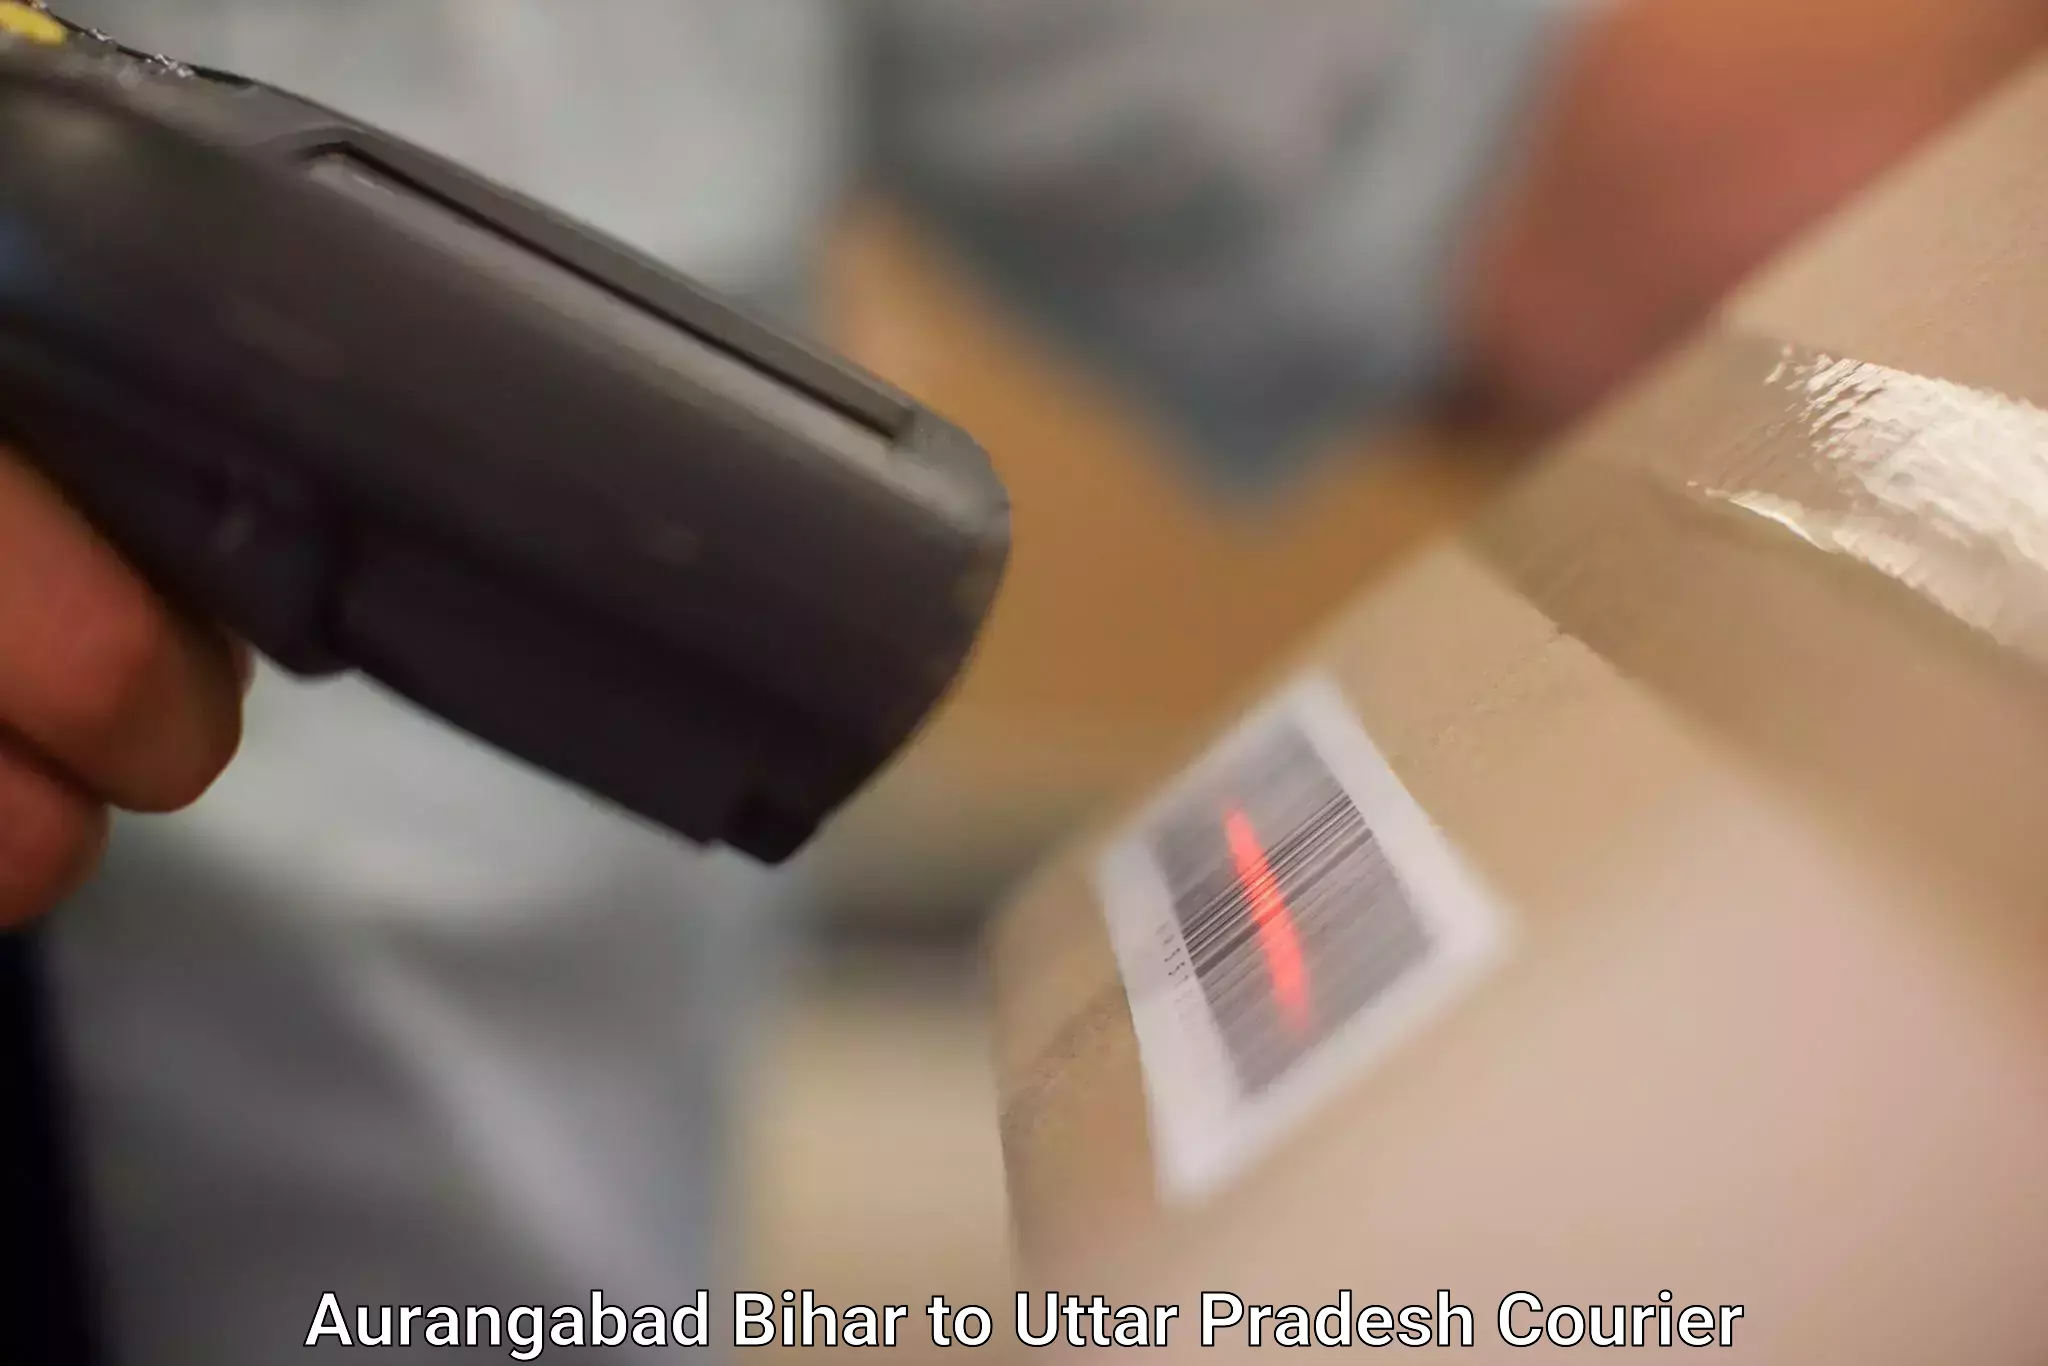 Courier service innovation Aurangabad Bihar to Robertsganj